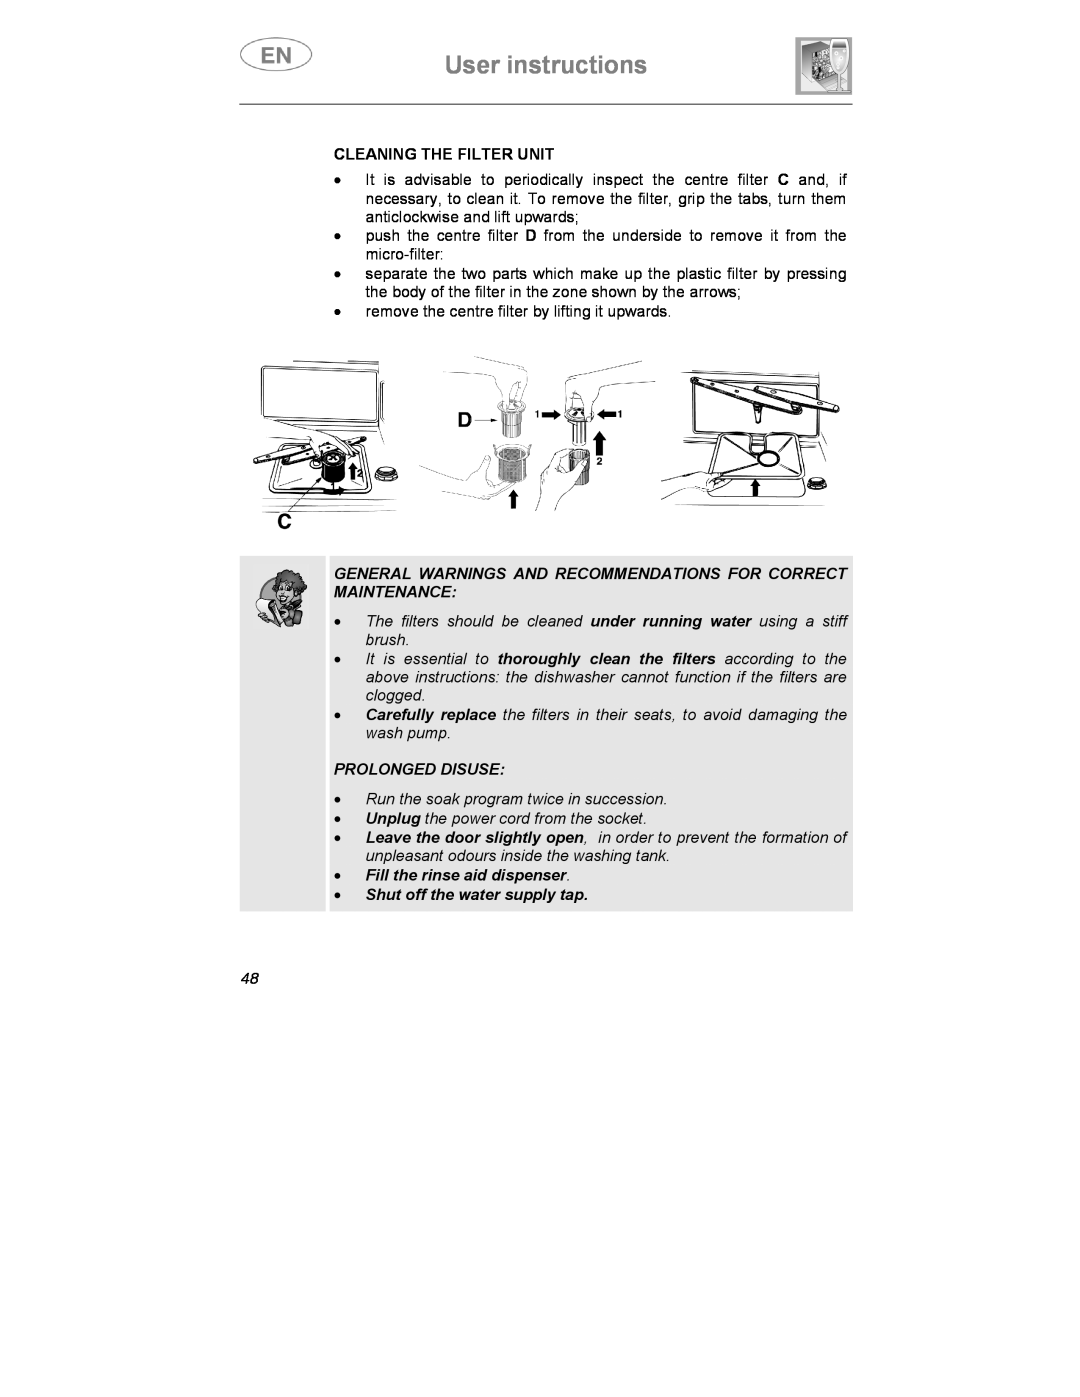 Smeg KS60-2, KS60-3T User instructions, Cleaning The Filter Unit, Prolonged Disuse, Fill the rinse aid dispenser 